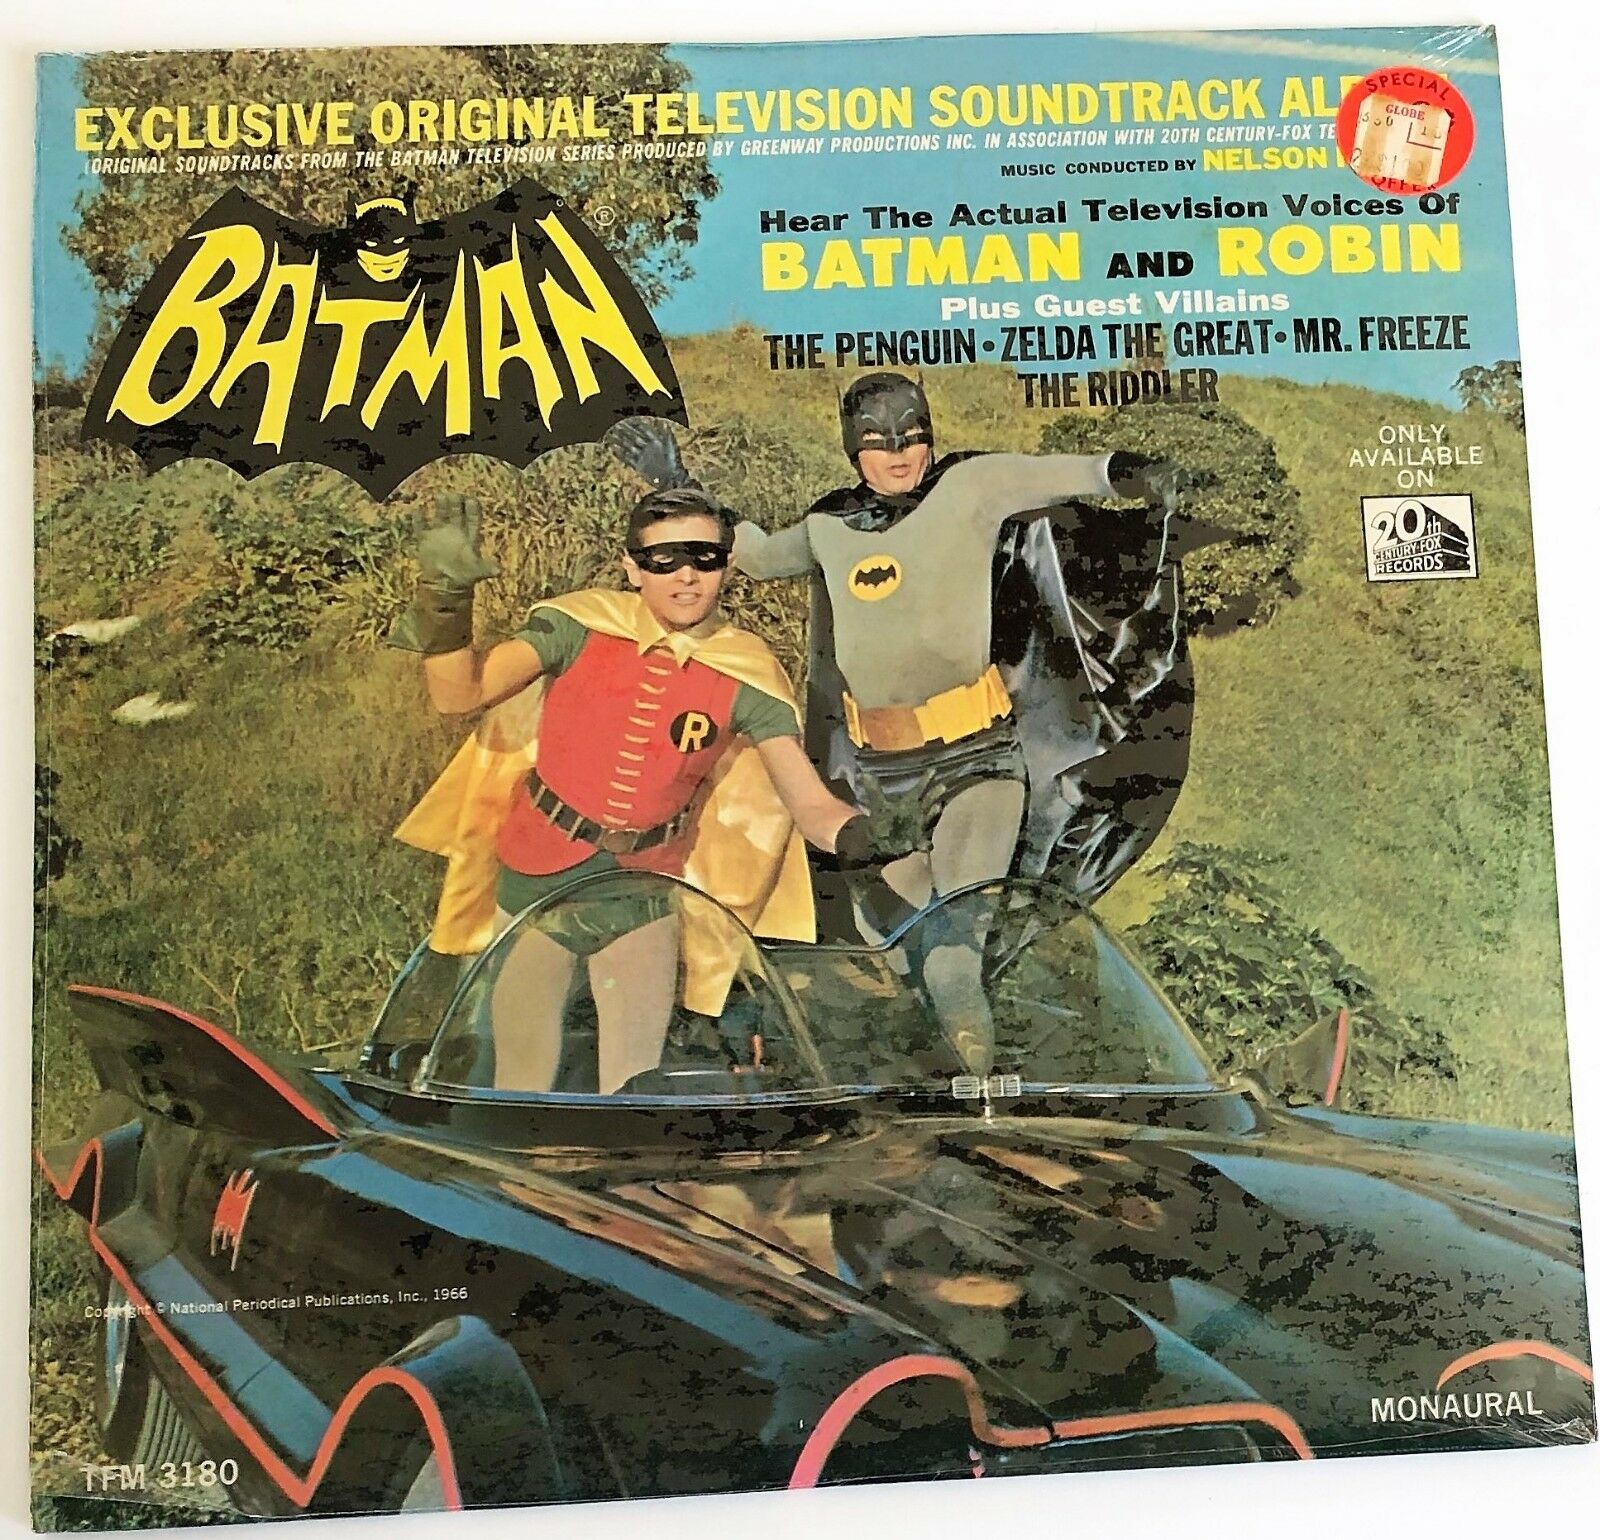 SEALED Soundtrack LP Batman Original Television Album 20th Century TFM-3180 MONO